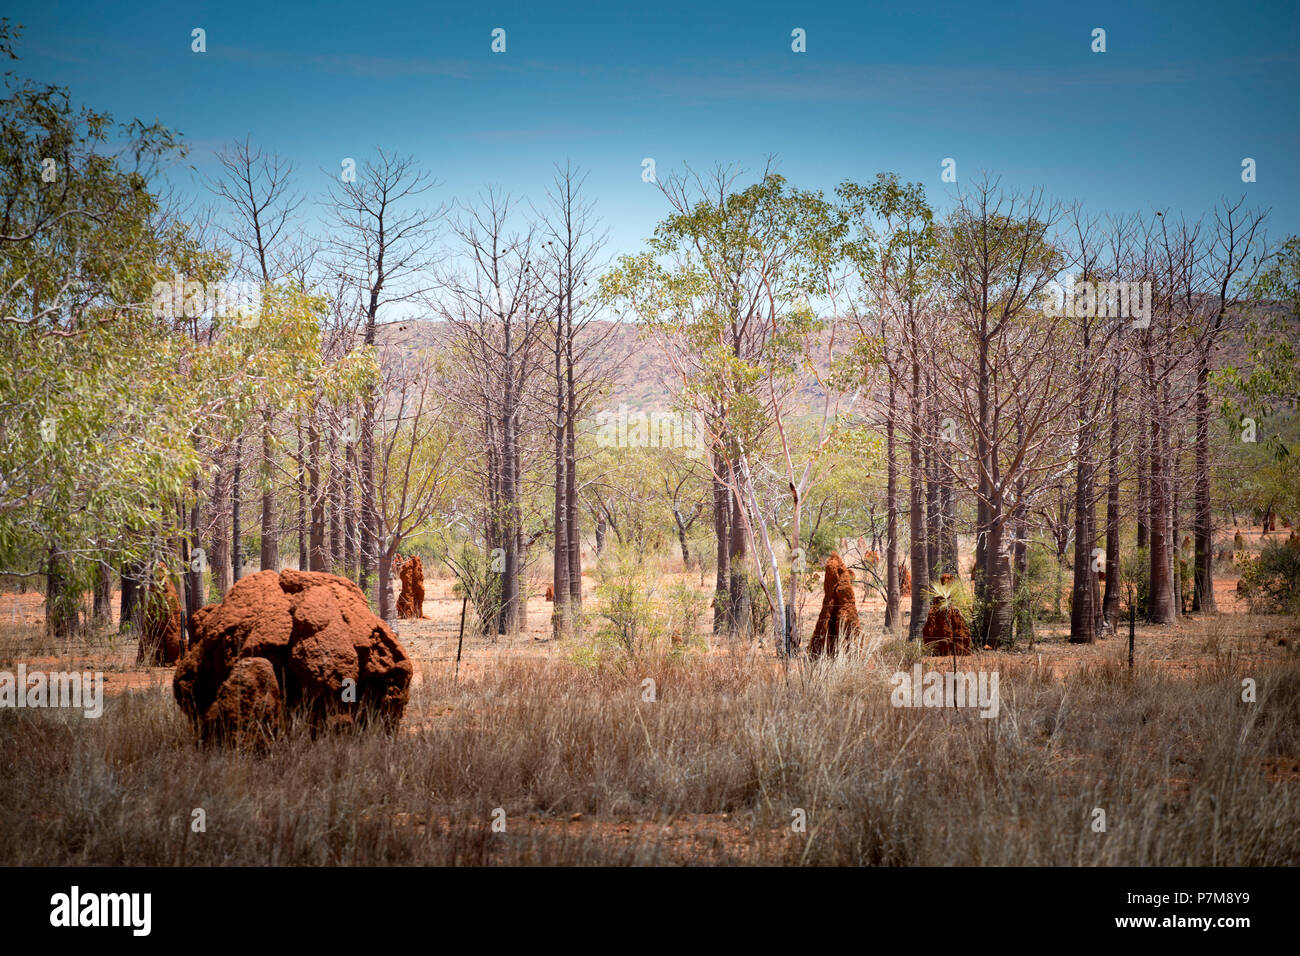 Young Baobab trees at the Kimberley, Western Australia Stock Photo